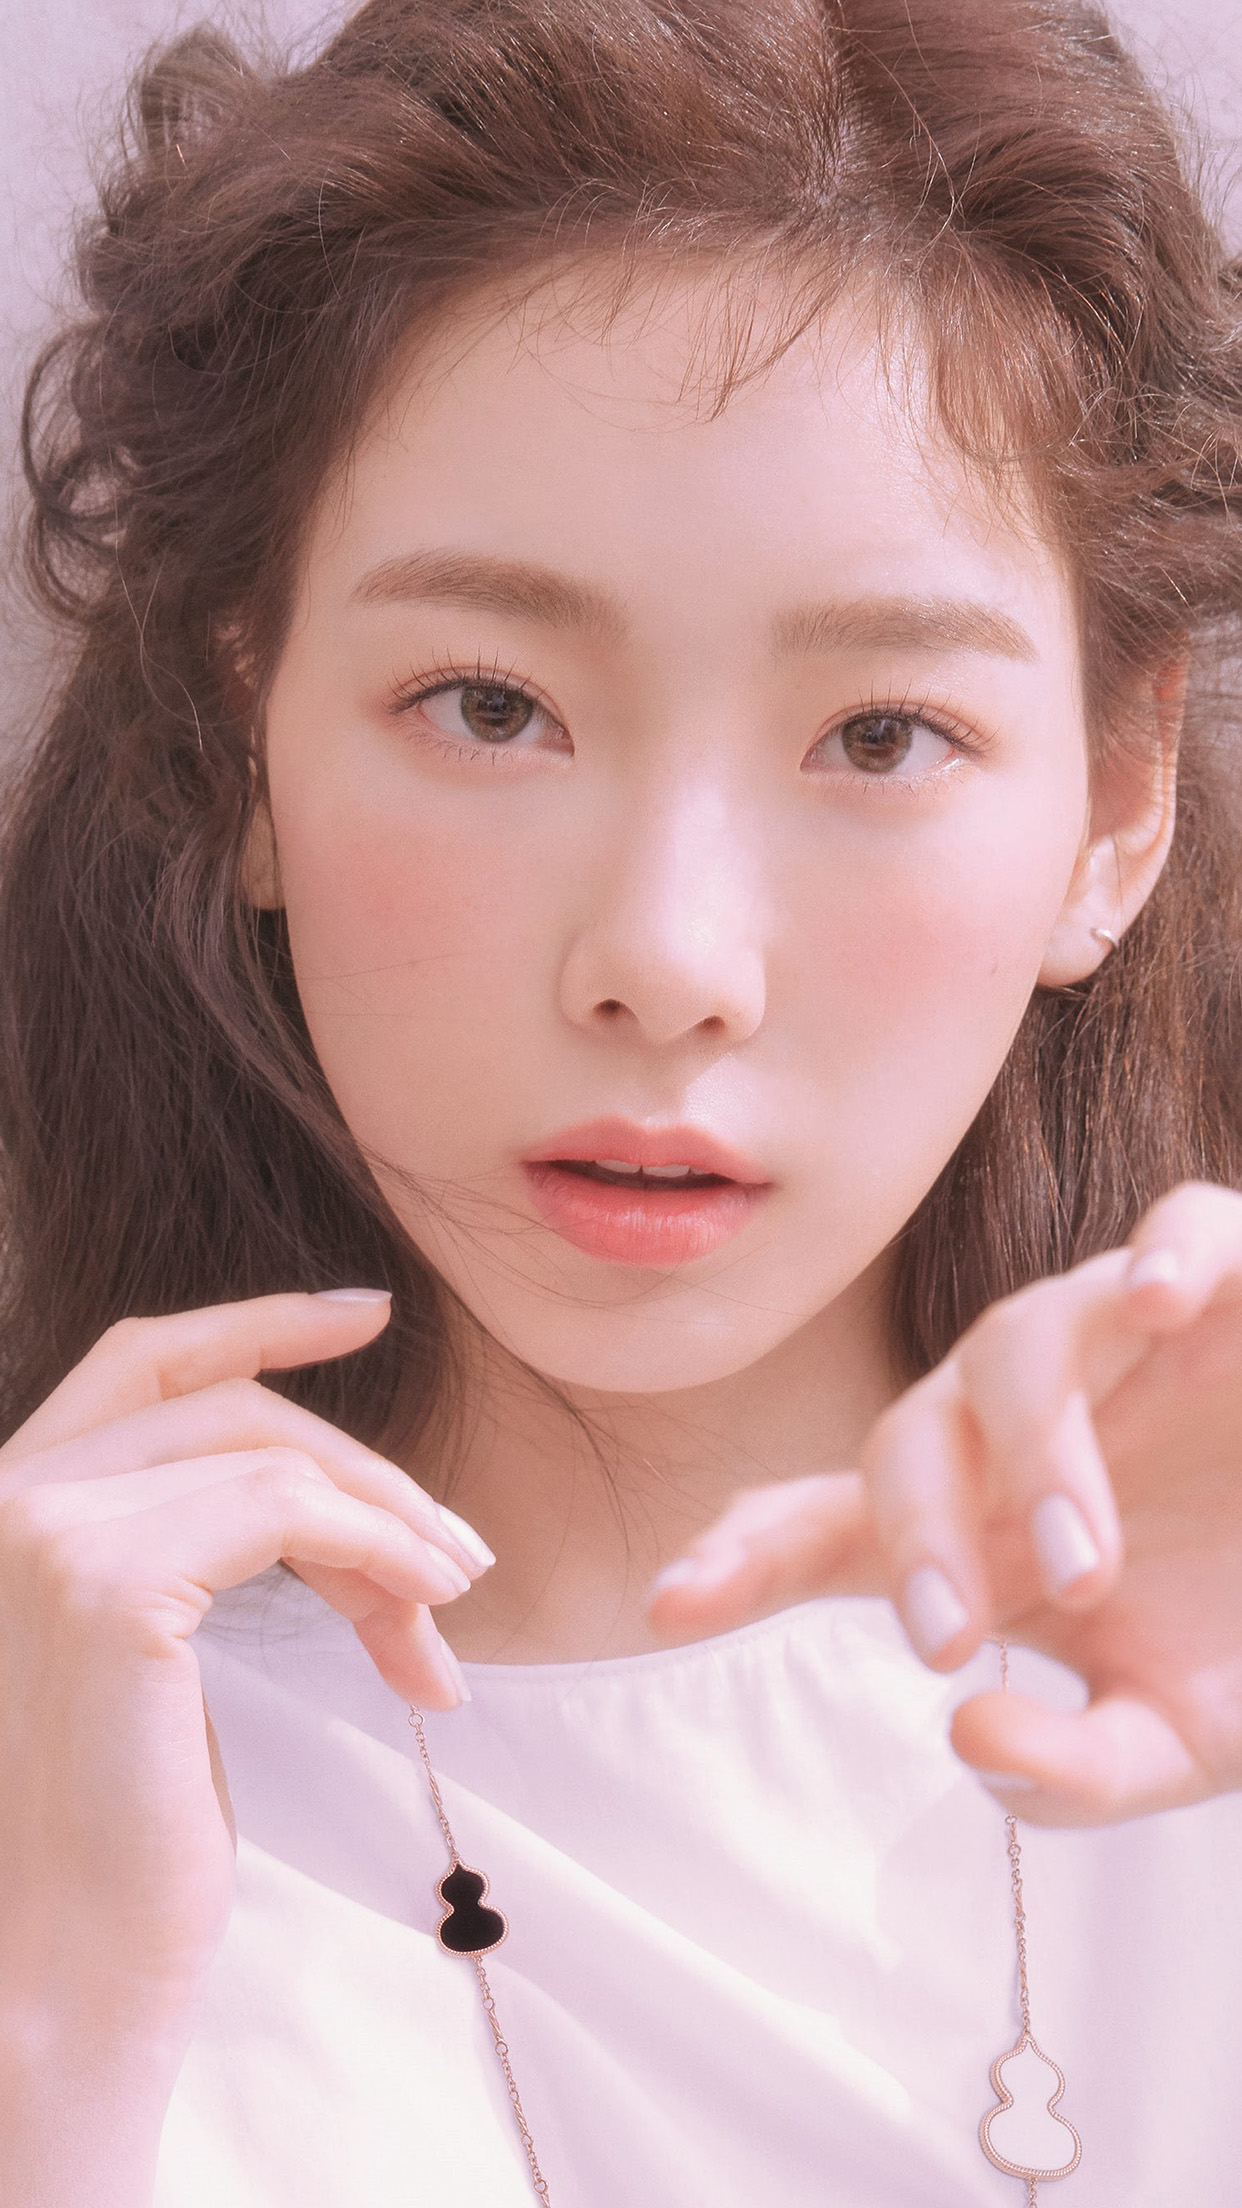 Korean K Pop Women Portrait Photography Red Lipstick Kim Taeyeon SNSD SNSD Taeyeon Looking At Viewer 1242x2208